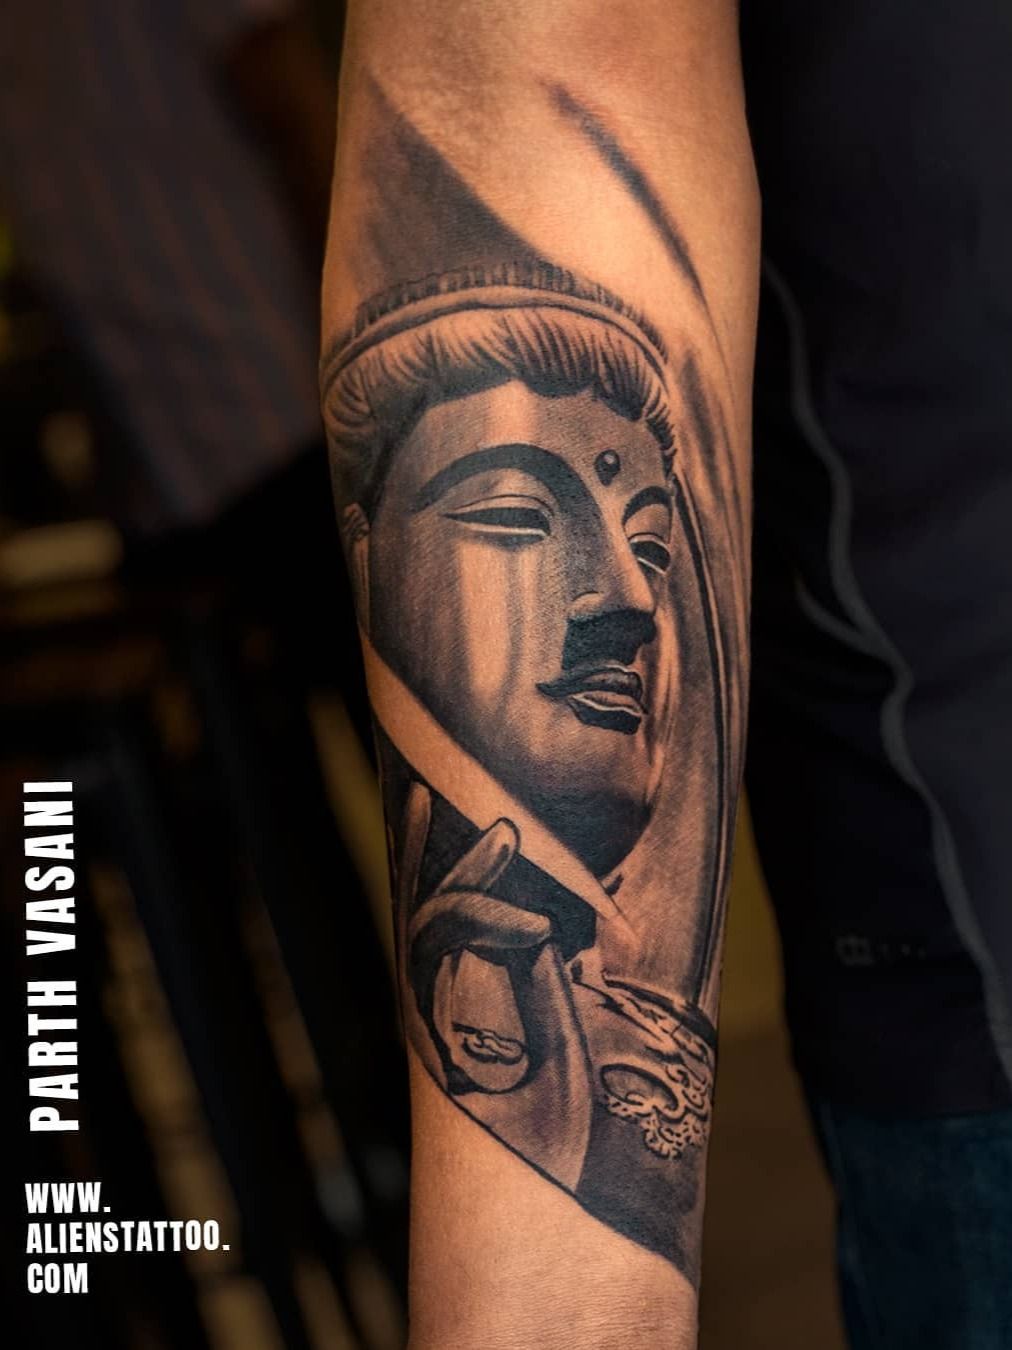 Buddha tattoo done on the inner forearm, illustrative